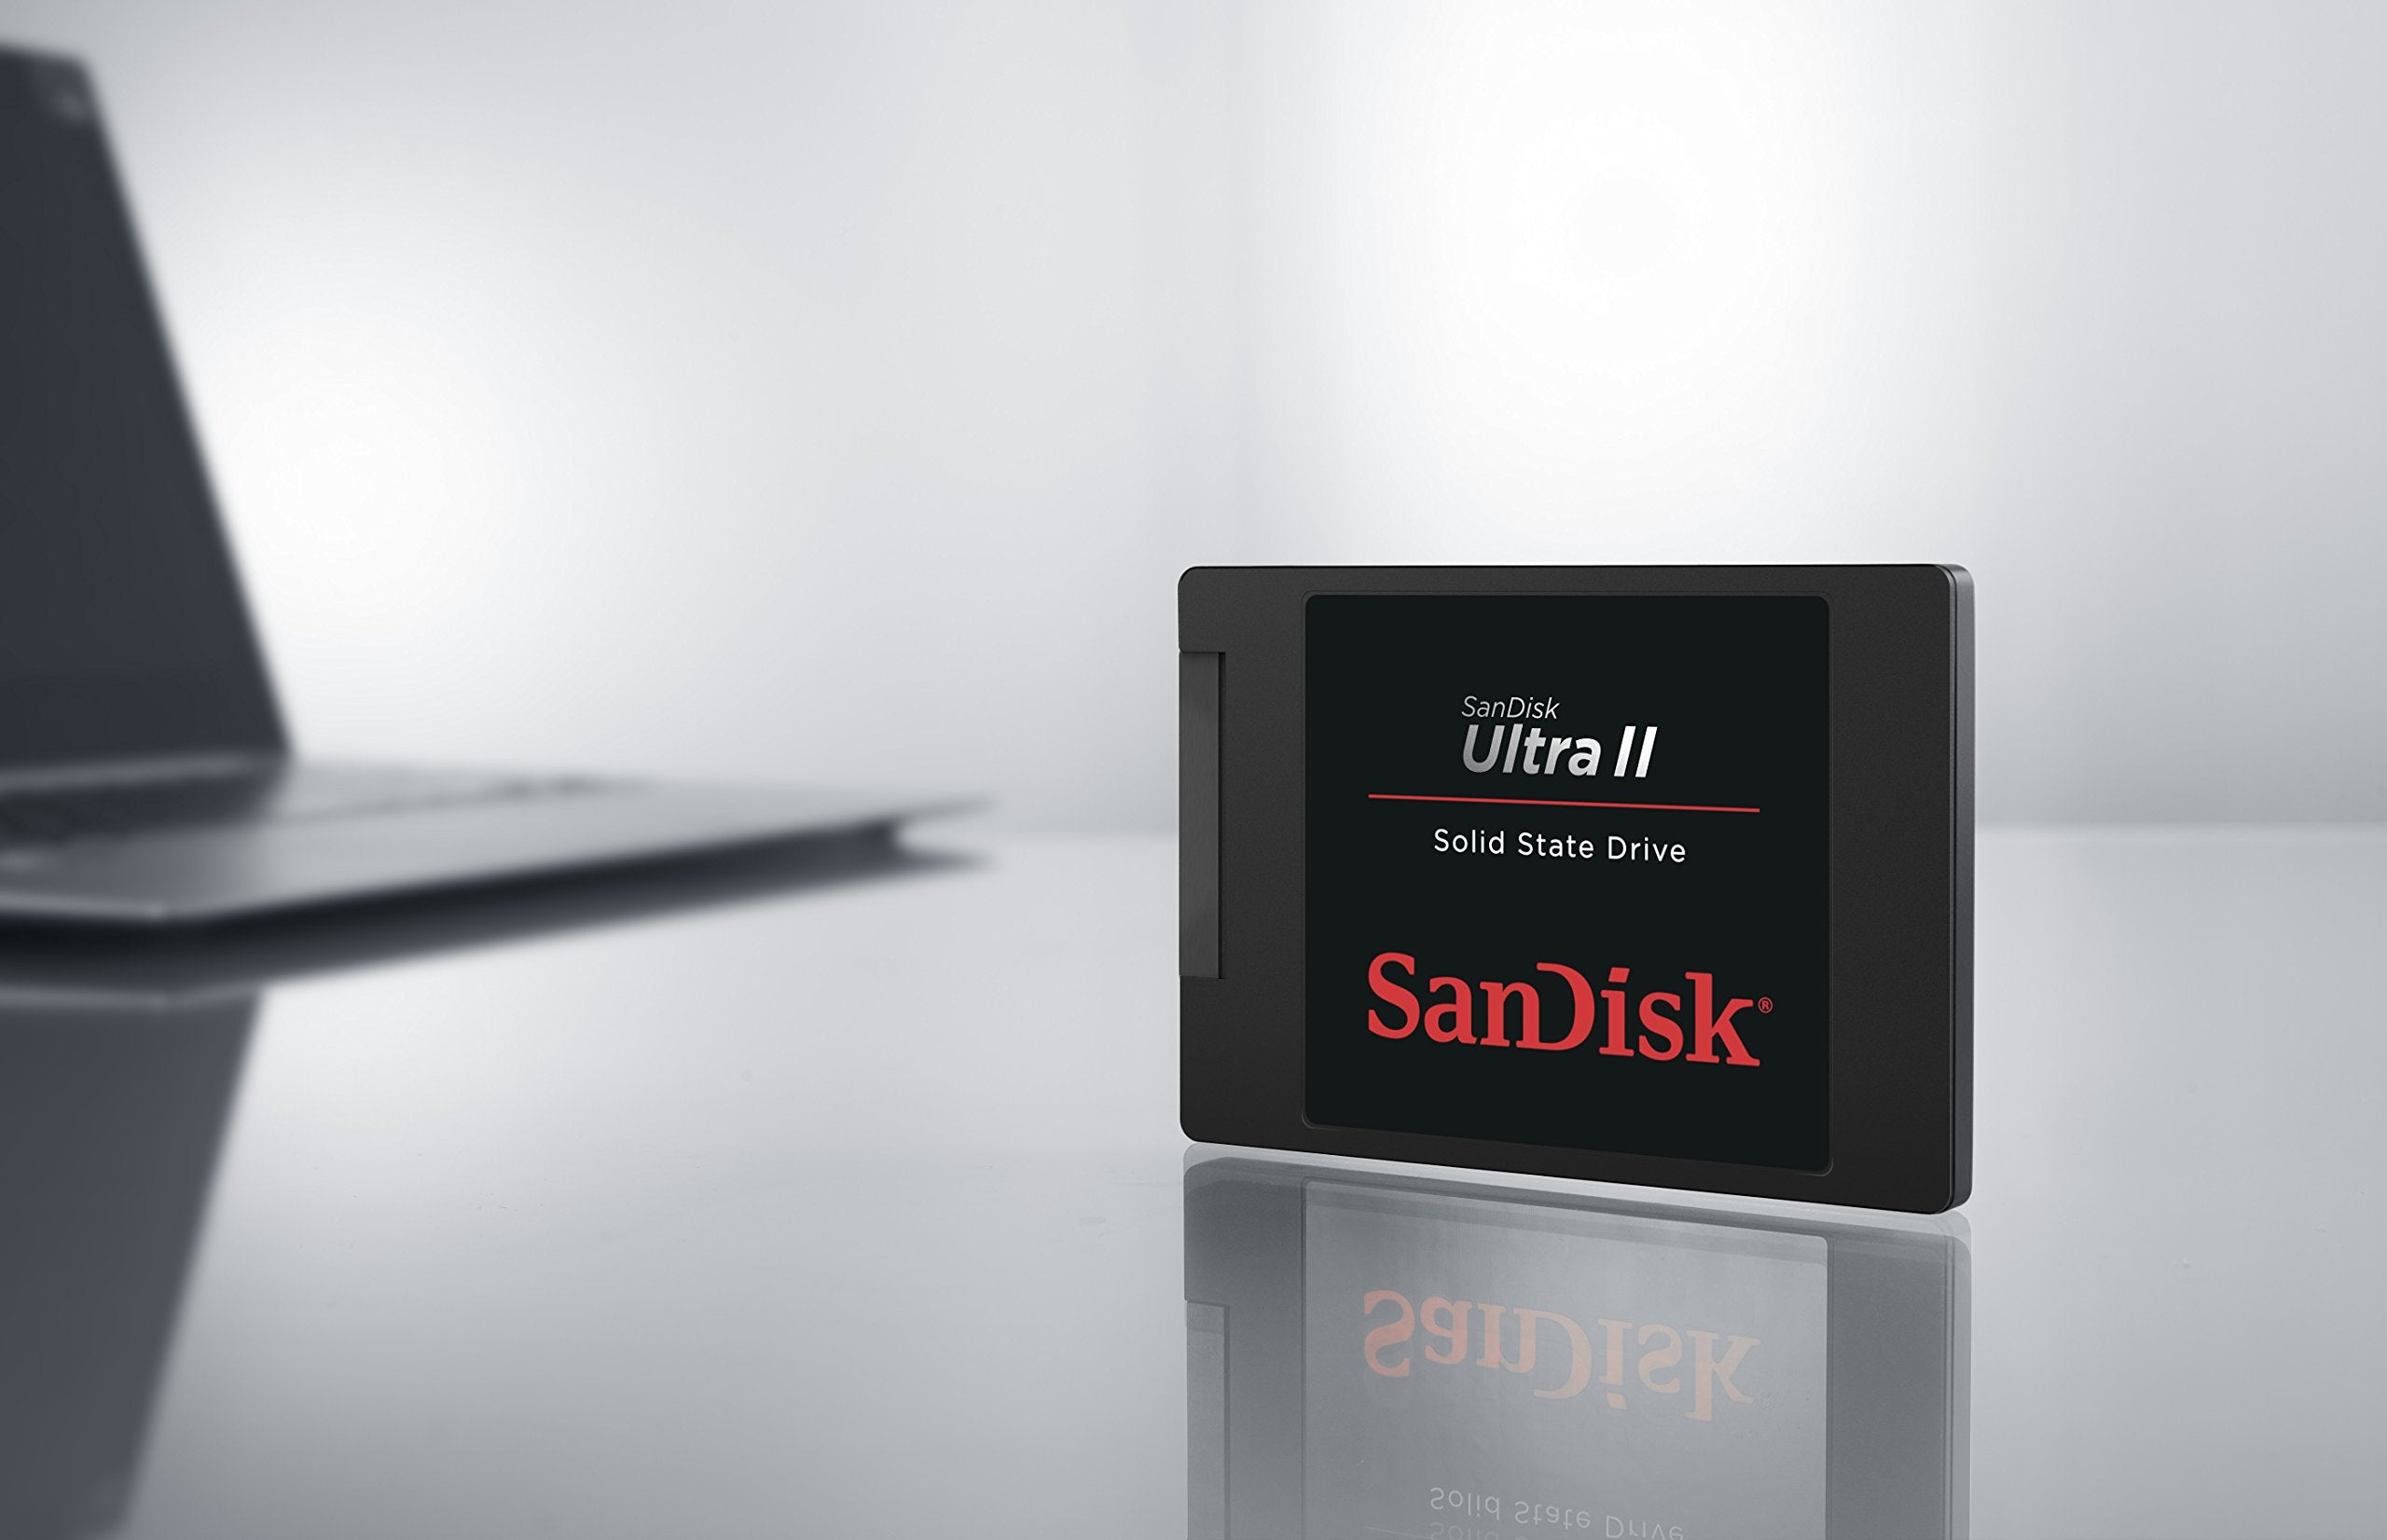 SanDisk Ultra II 250GB SATA III SSD - 2.5-Inch 7mm Height Solid State Drive - SDSSDHII-250G-G25